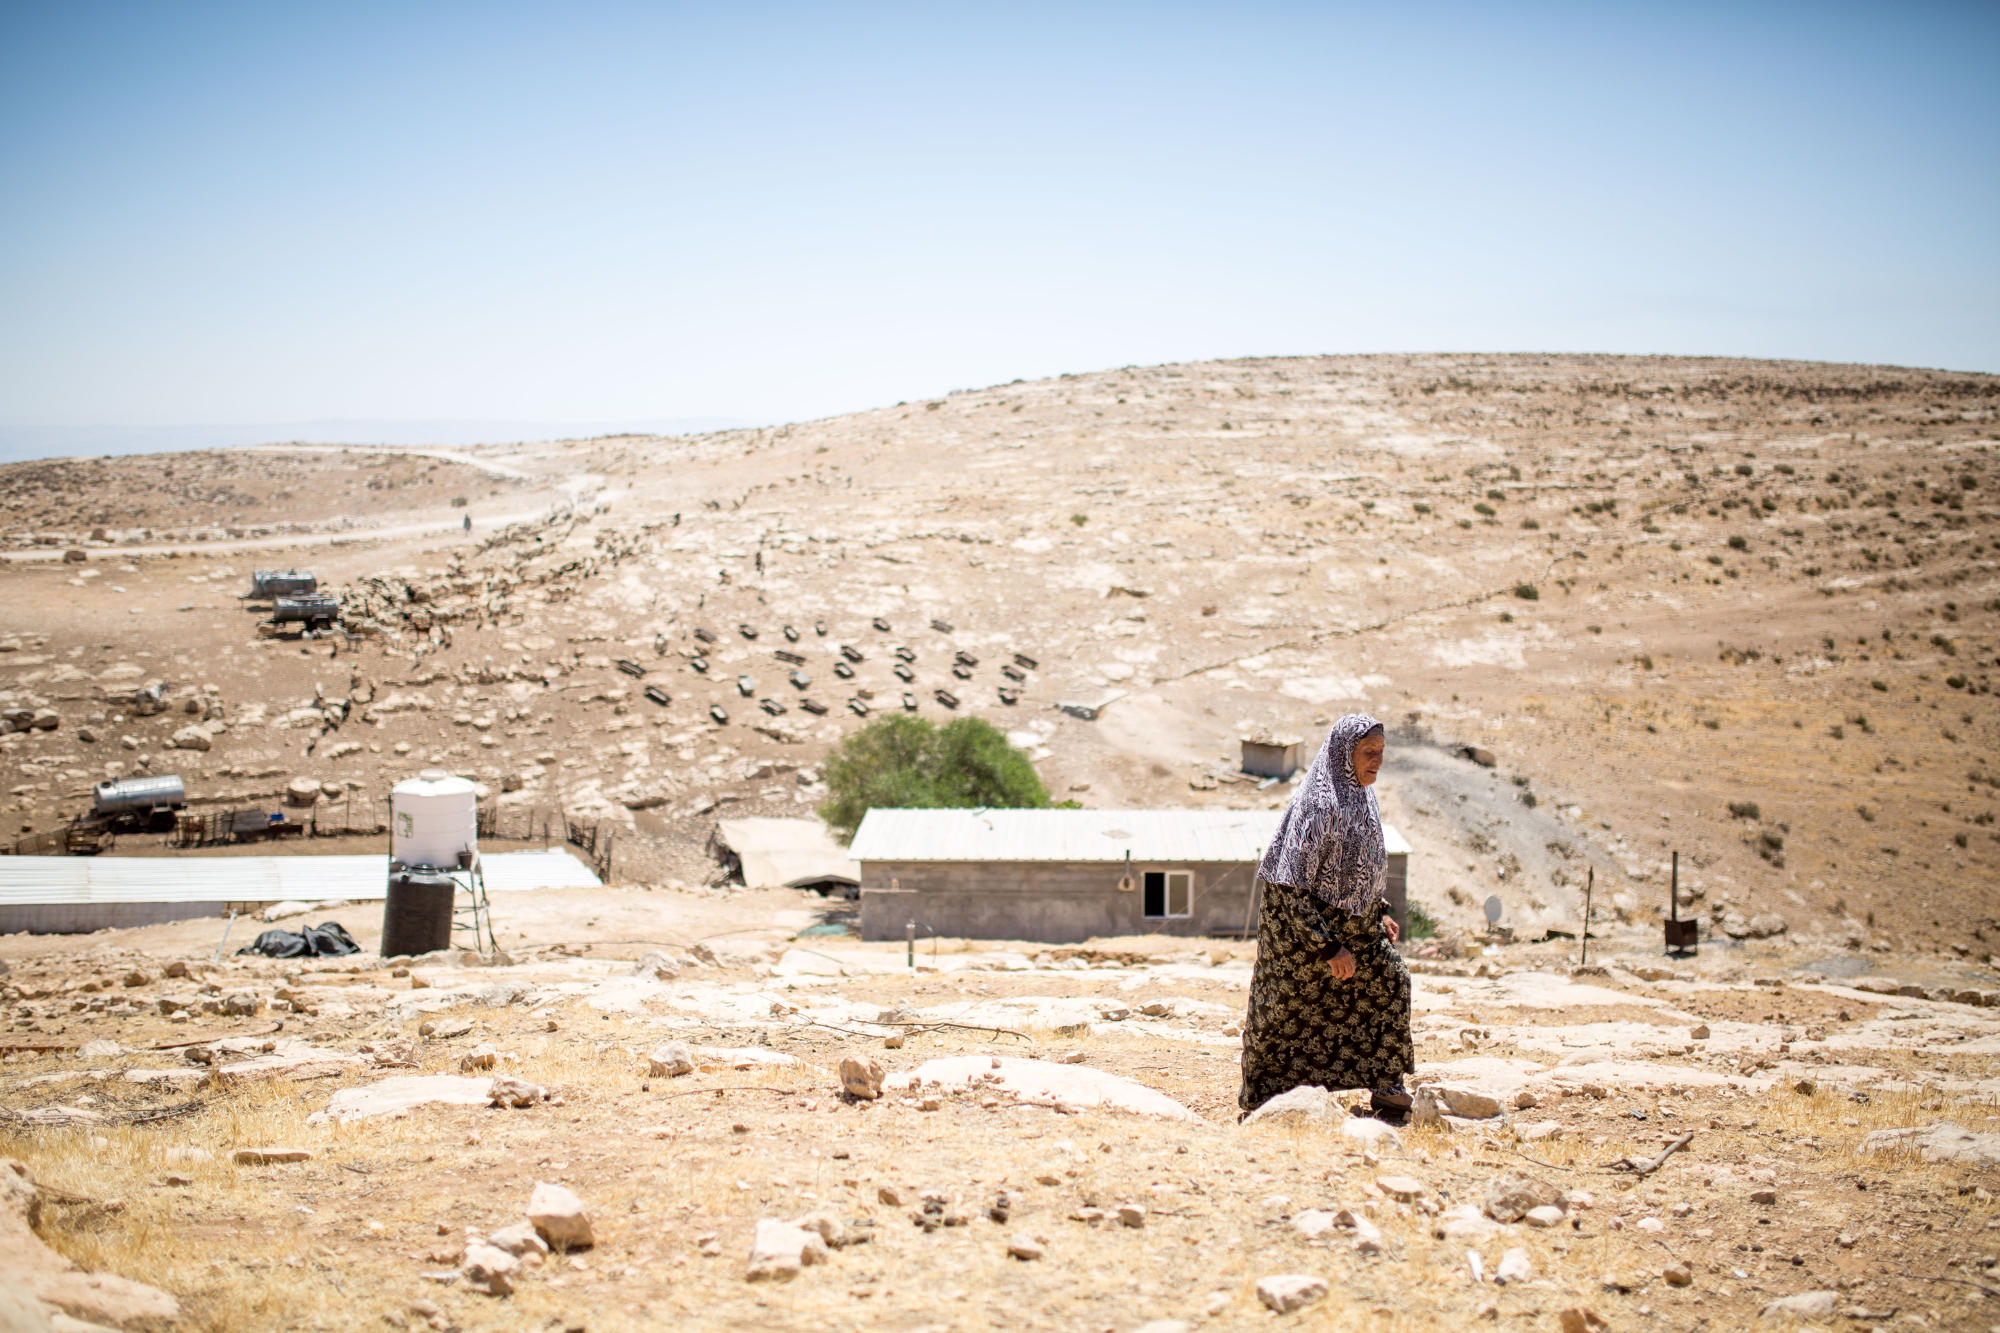 Palestinians in Khirbet Tuba face increased settler violence